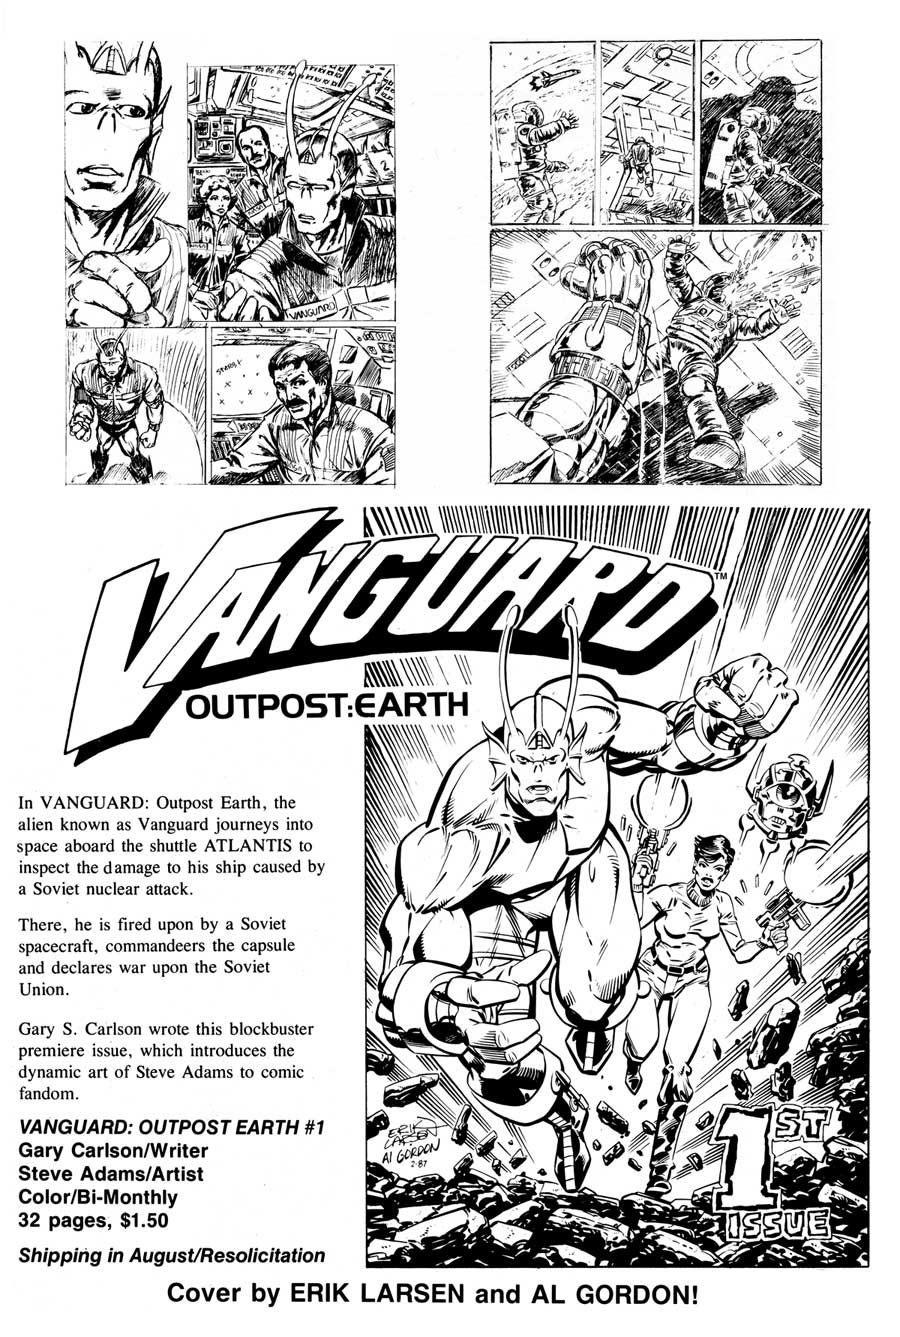 Vanguard: Ethereal Warriors cover